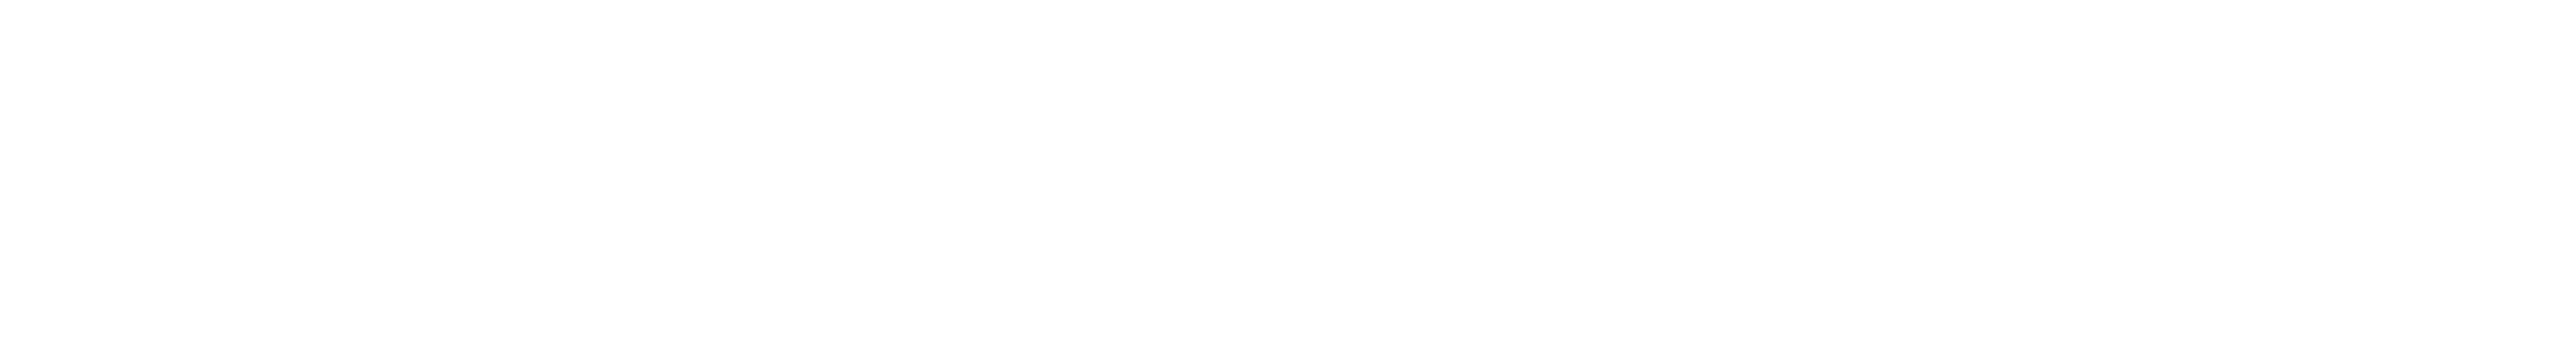 Carlsbad Charitable Foundation Logo - White